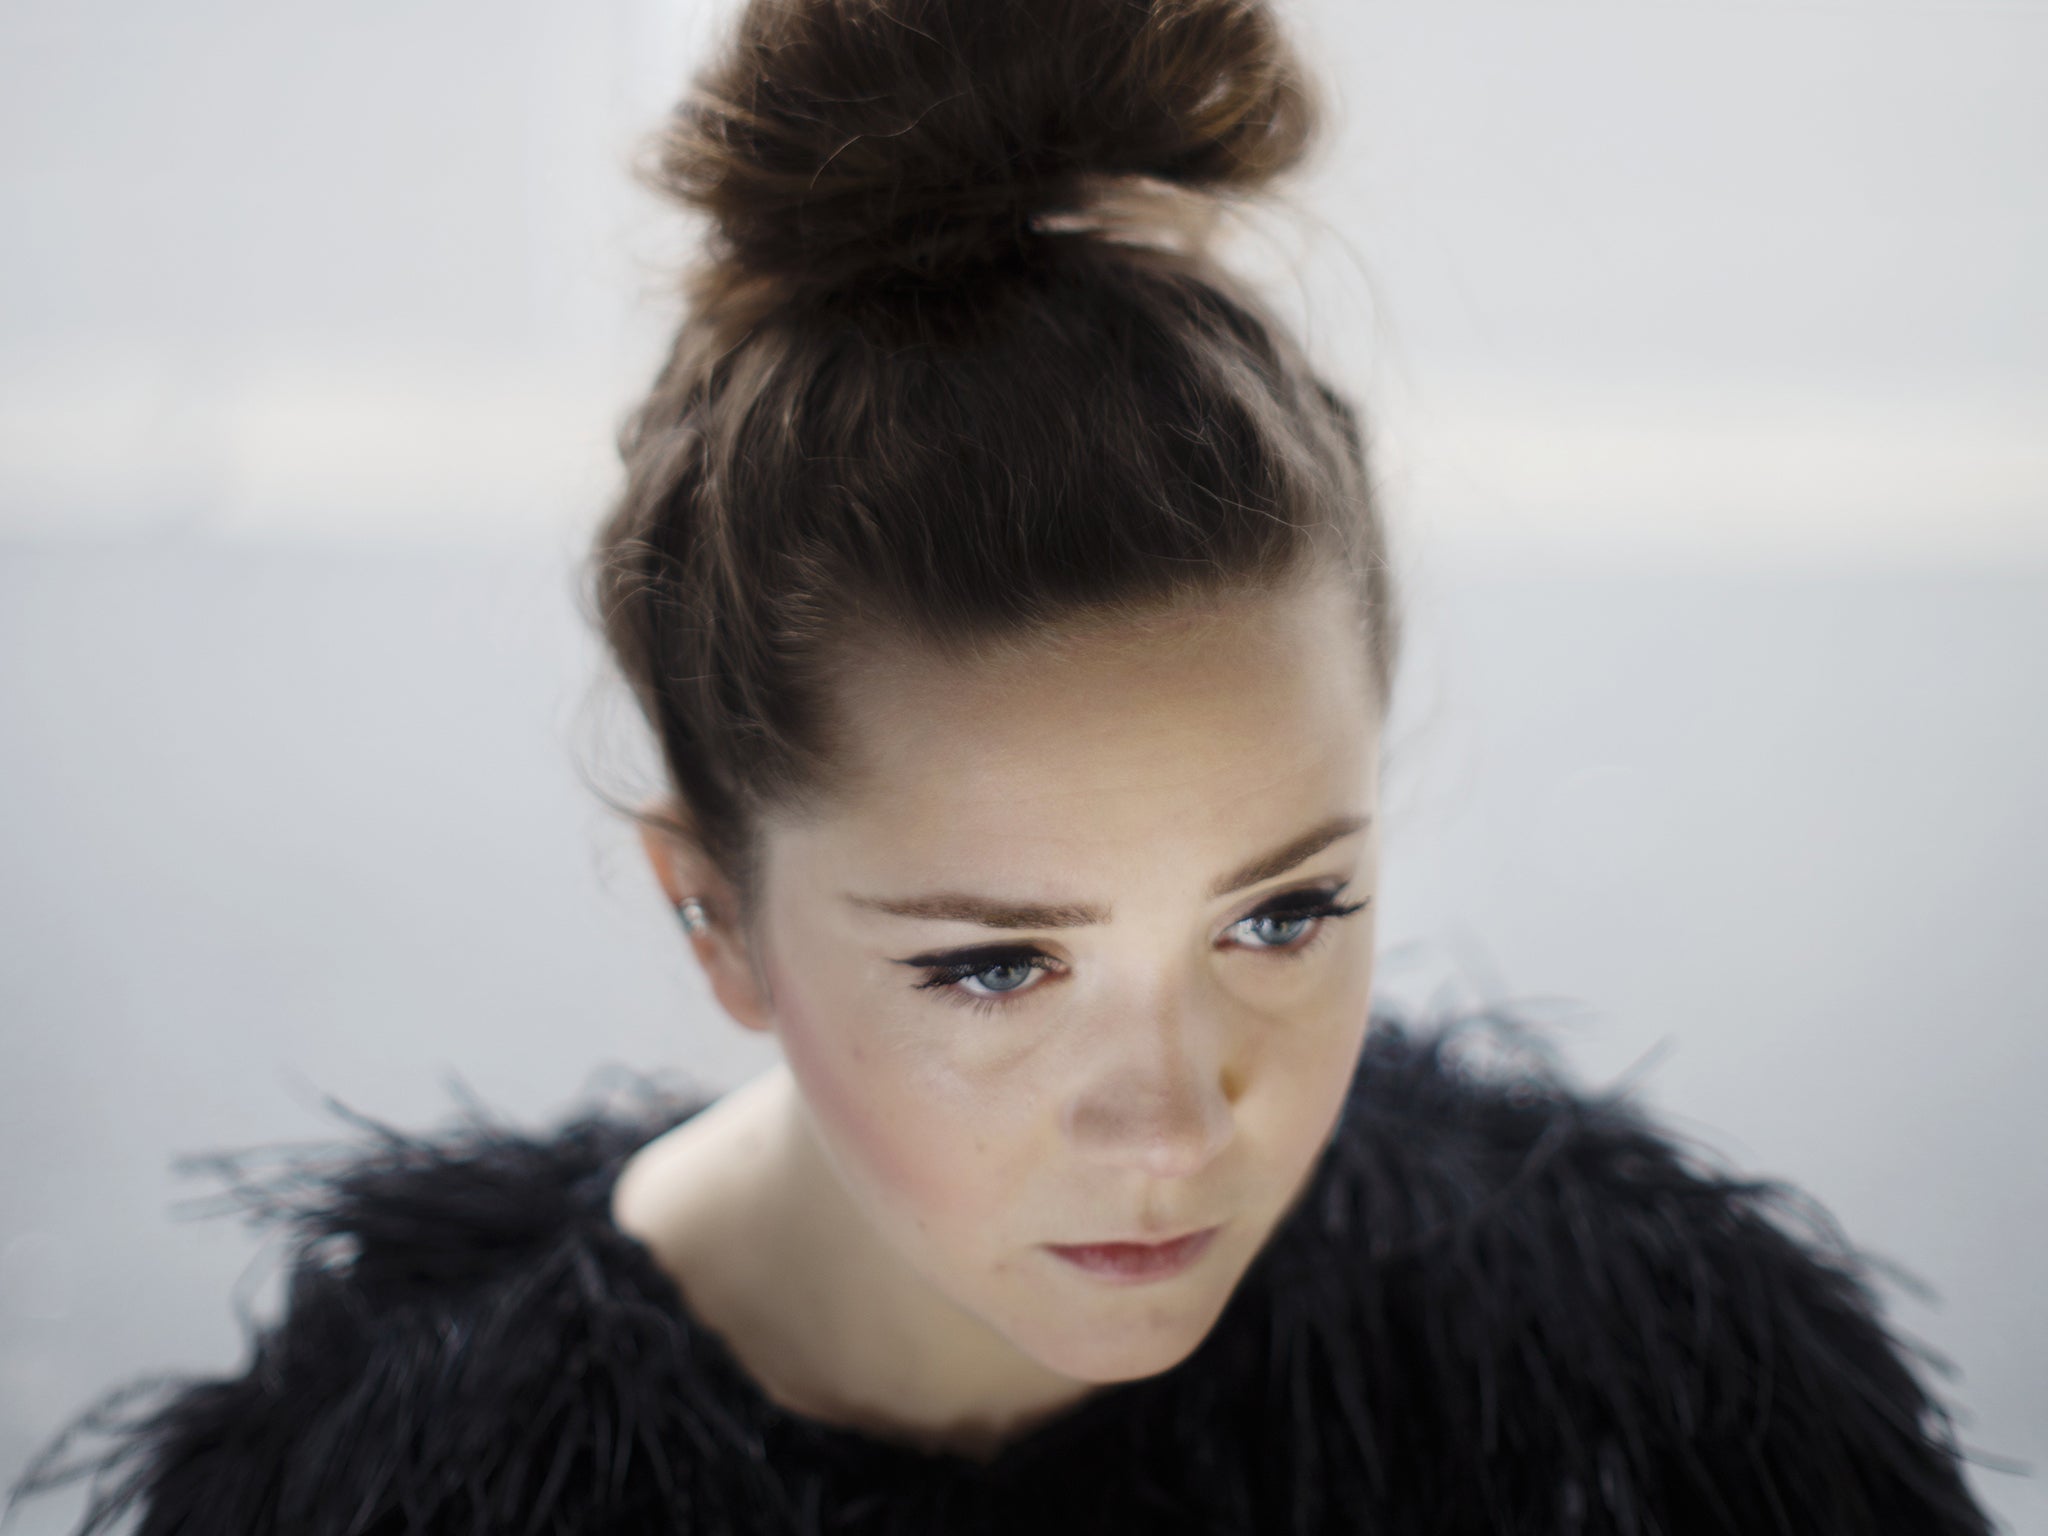 Norwegian artist Emilie Nicolas whose debut album is released in June